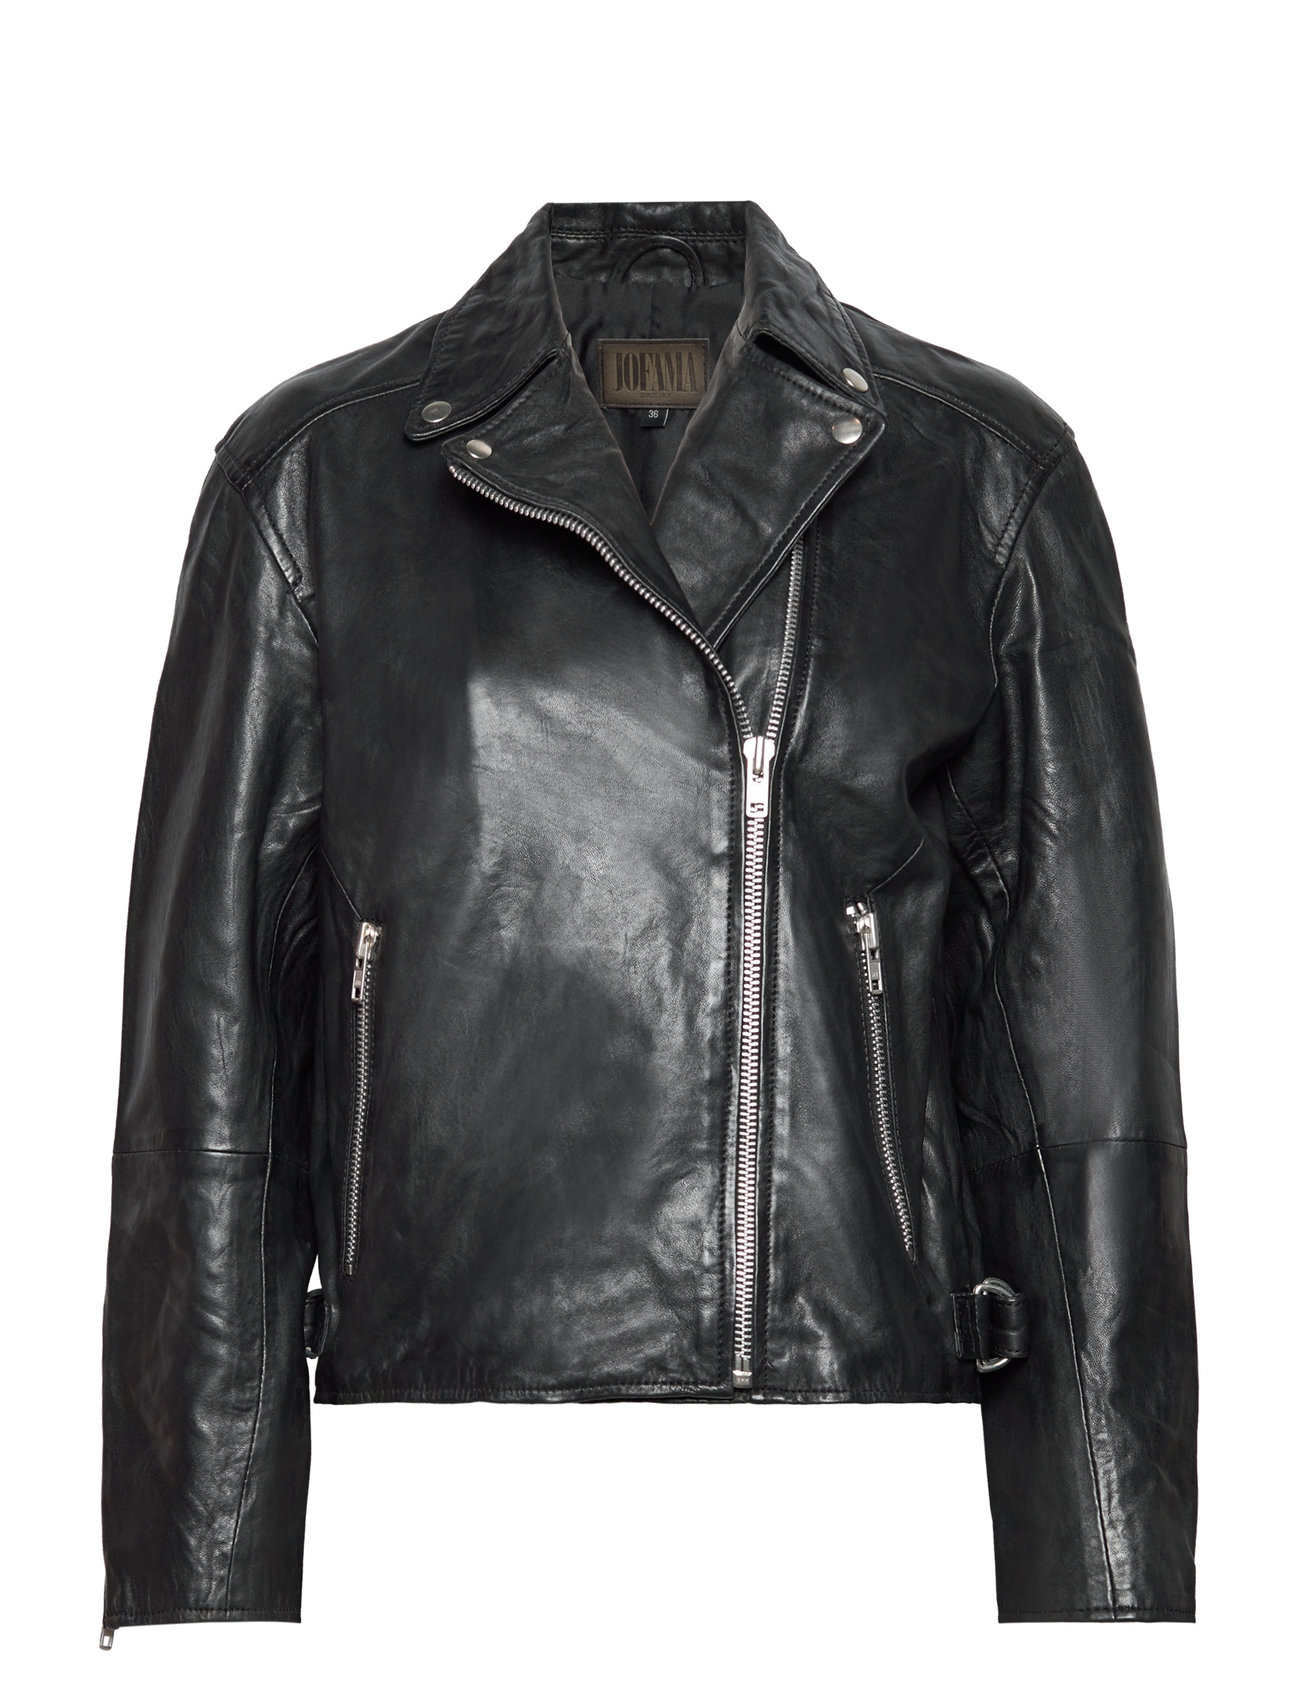 Jofama Tessa Oversized Biker - 229.50 €. Buy Leather jackets from ...